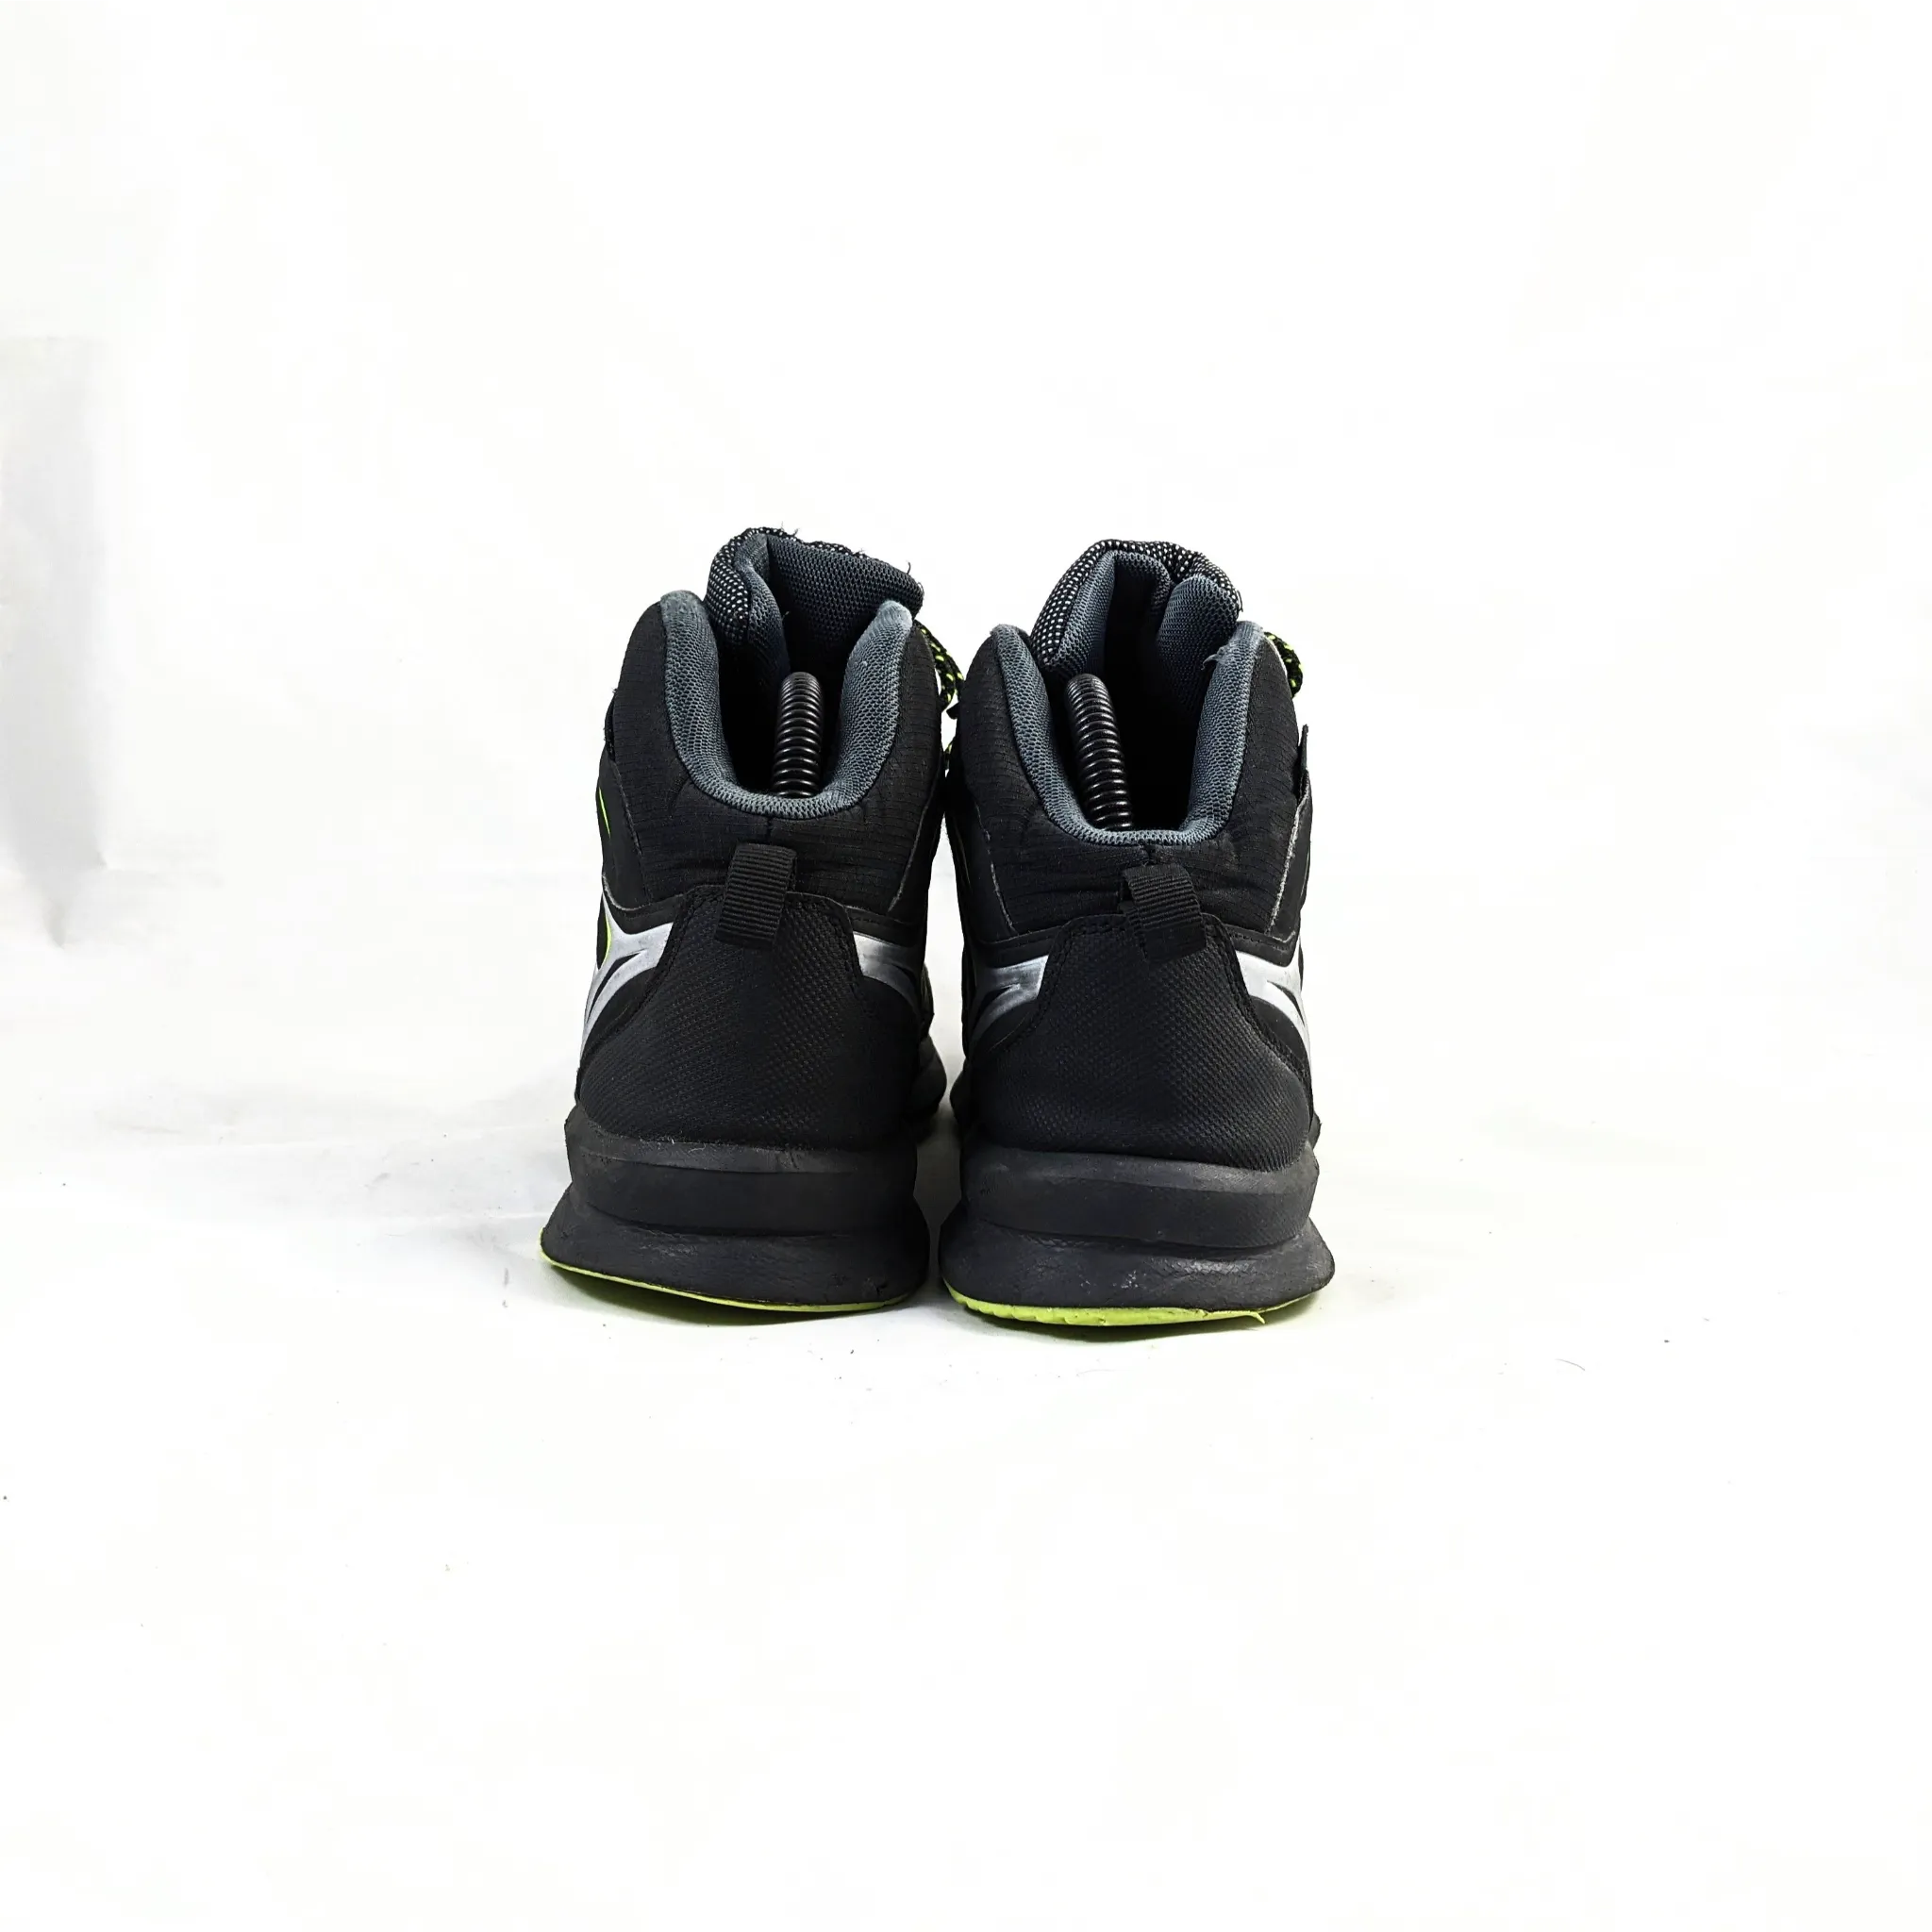 IceTex Black Boots